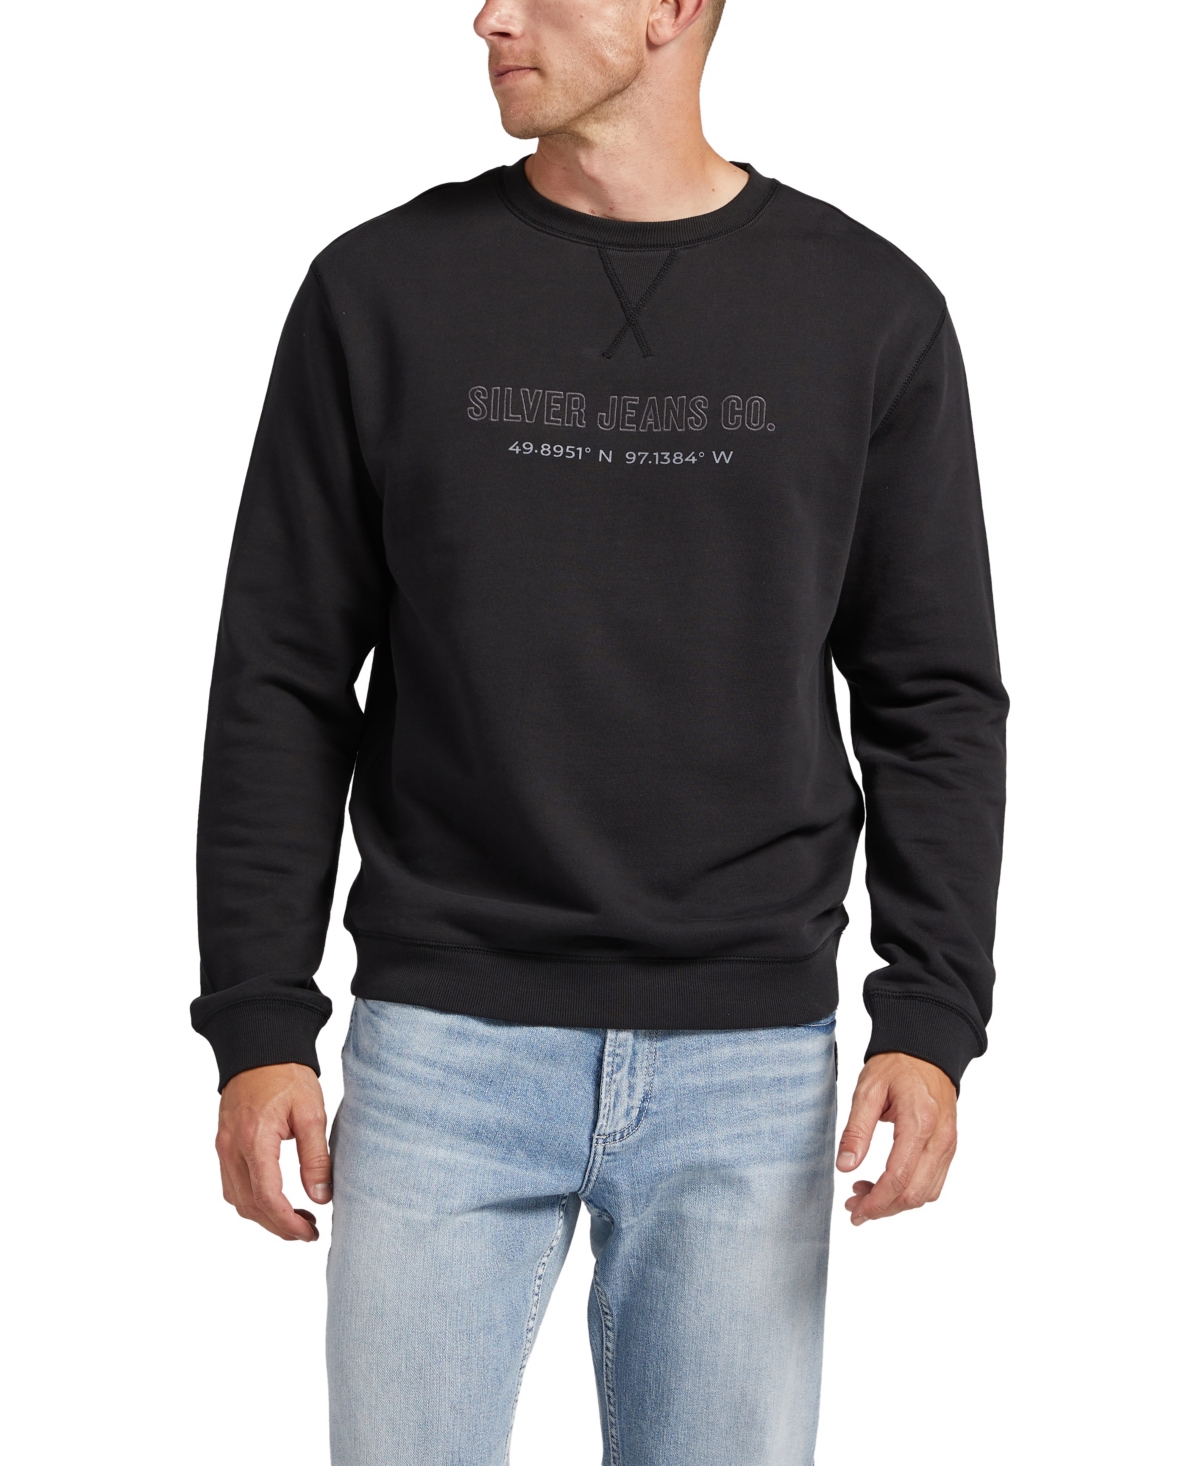 Silver Jeans Co. Men's Crewneck Sweatshirt In Black